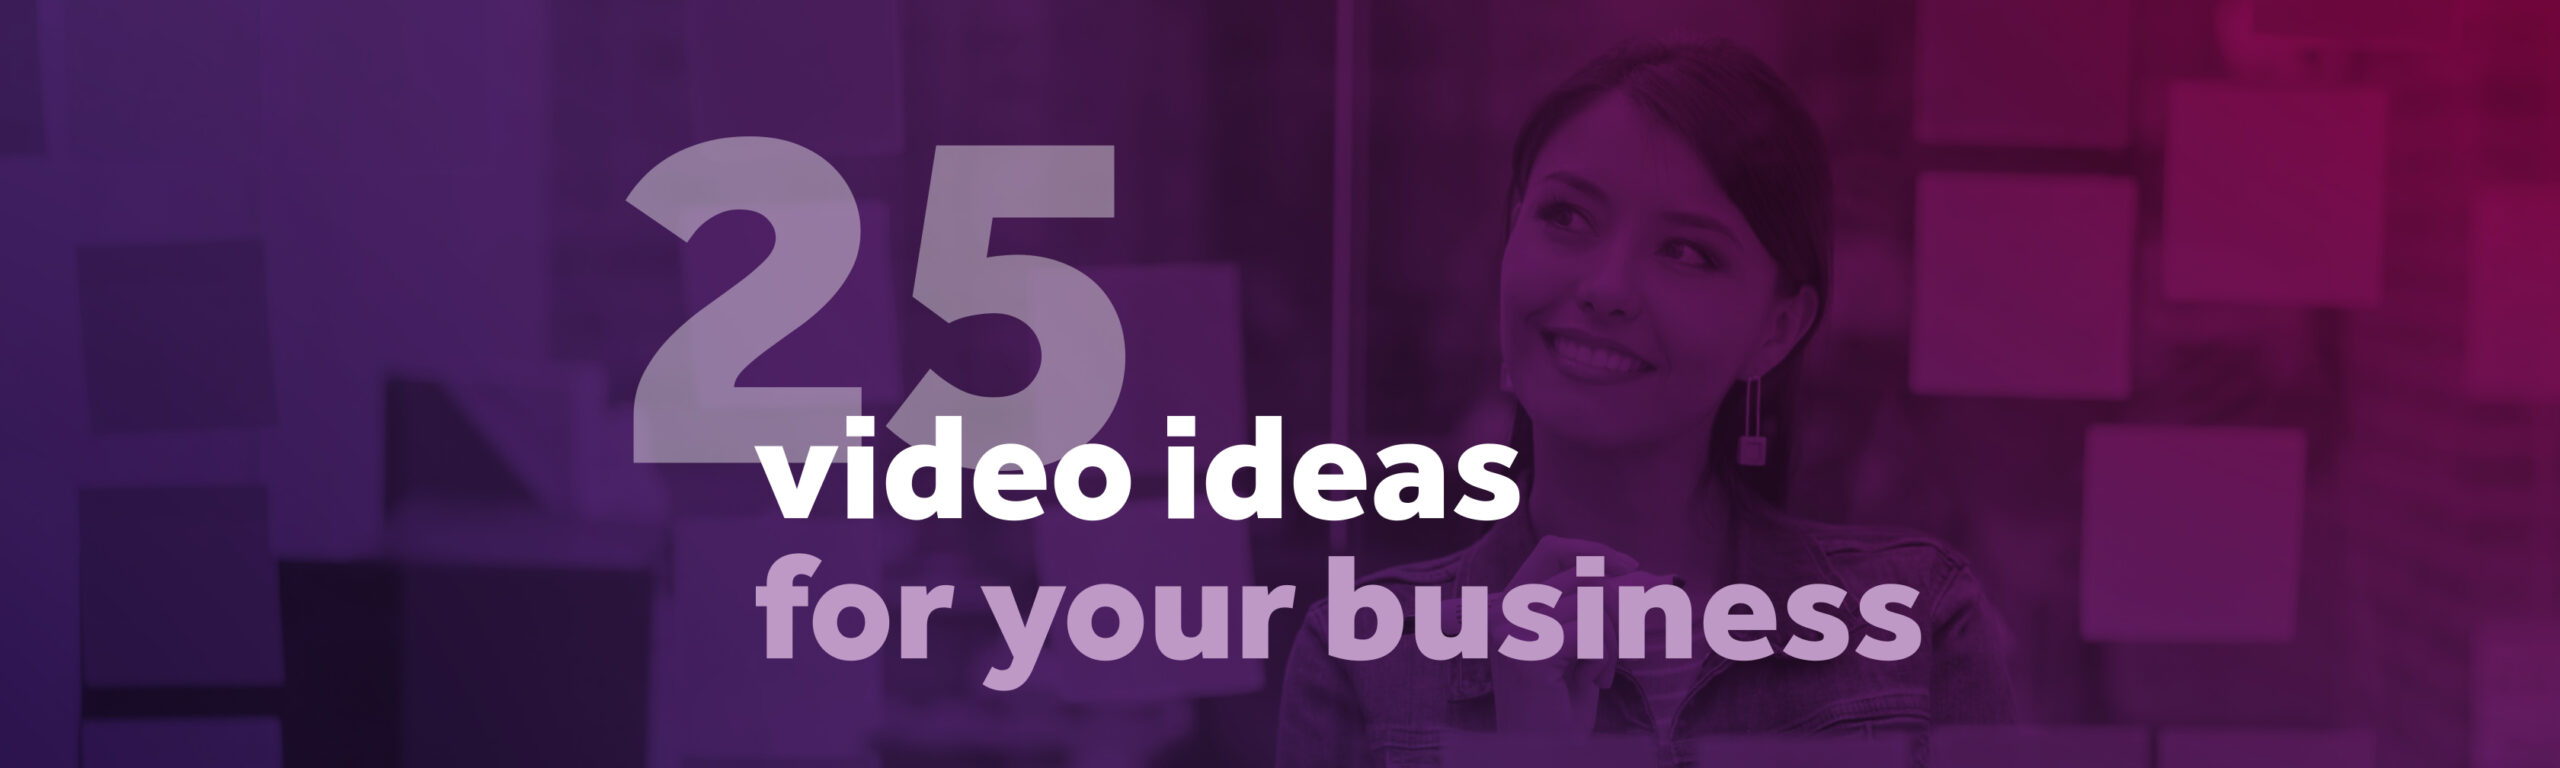 Video-Ideas-for-Business-BG4